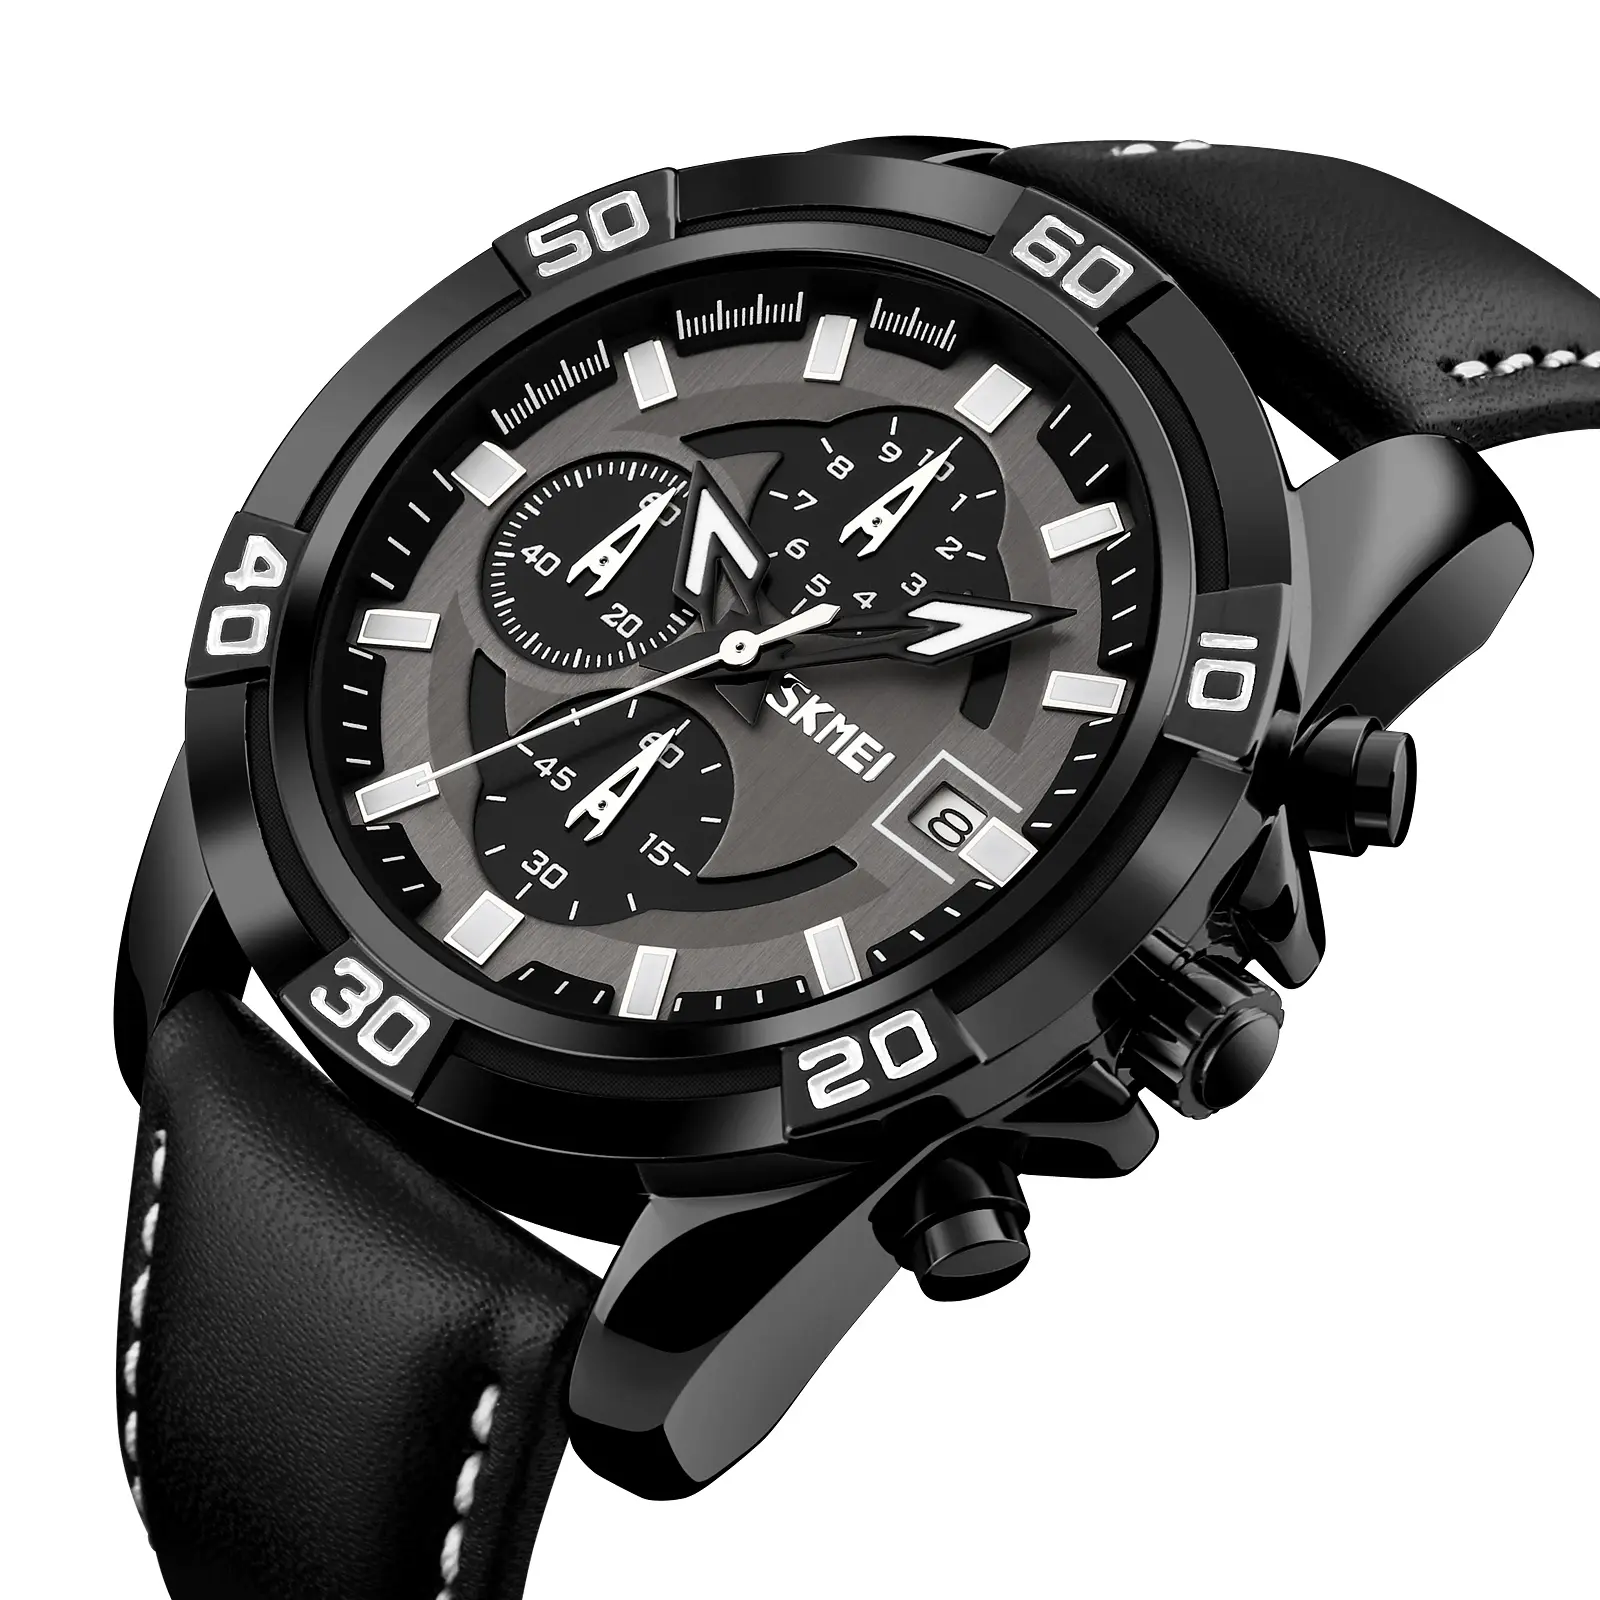 Skmei 9156 Genuine Leather Band Watches Luxury Watches Men Quartz watches